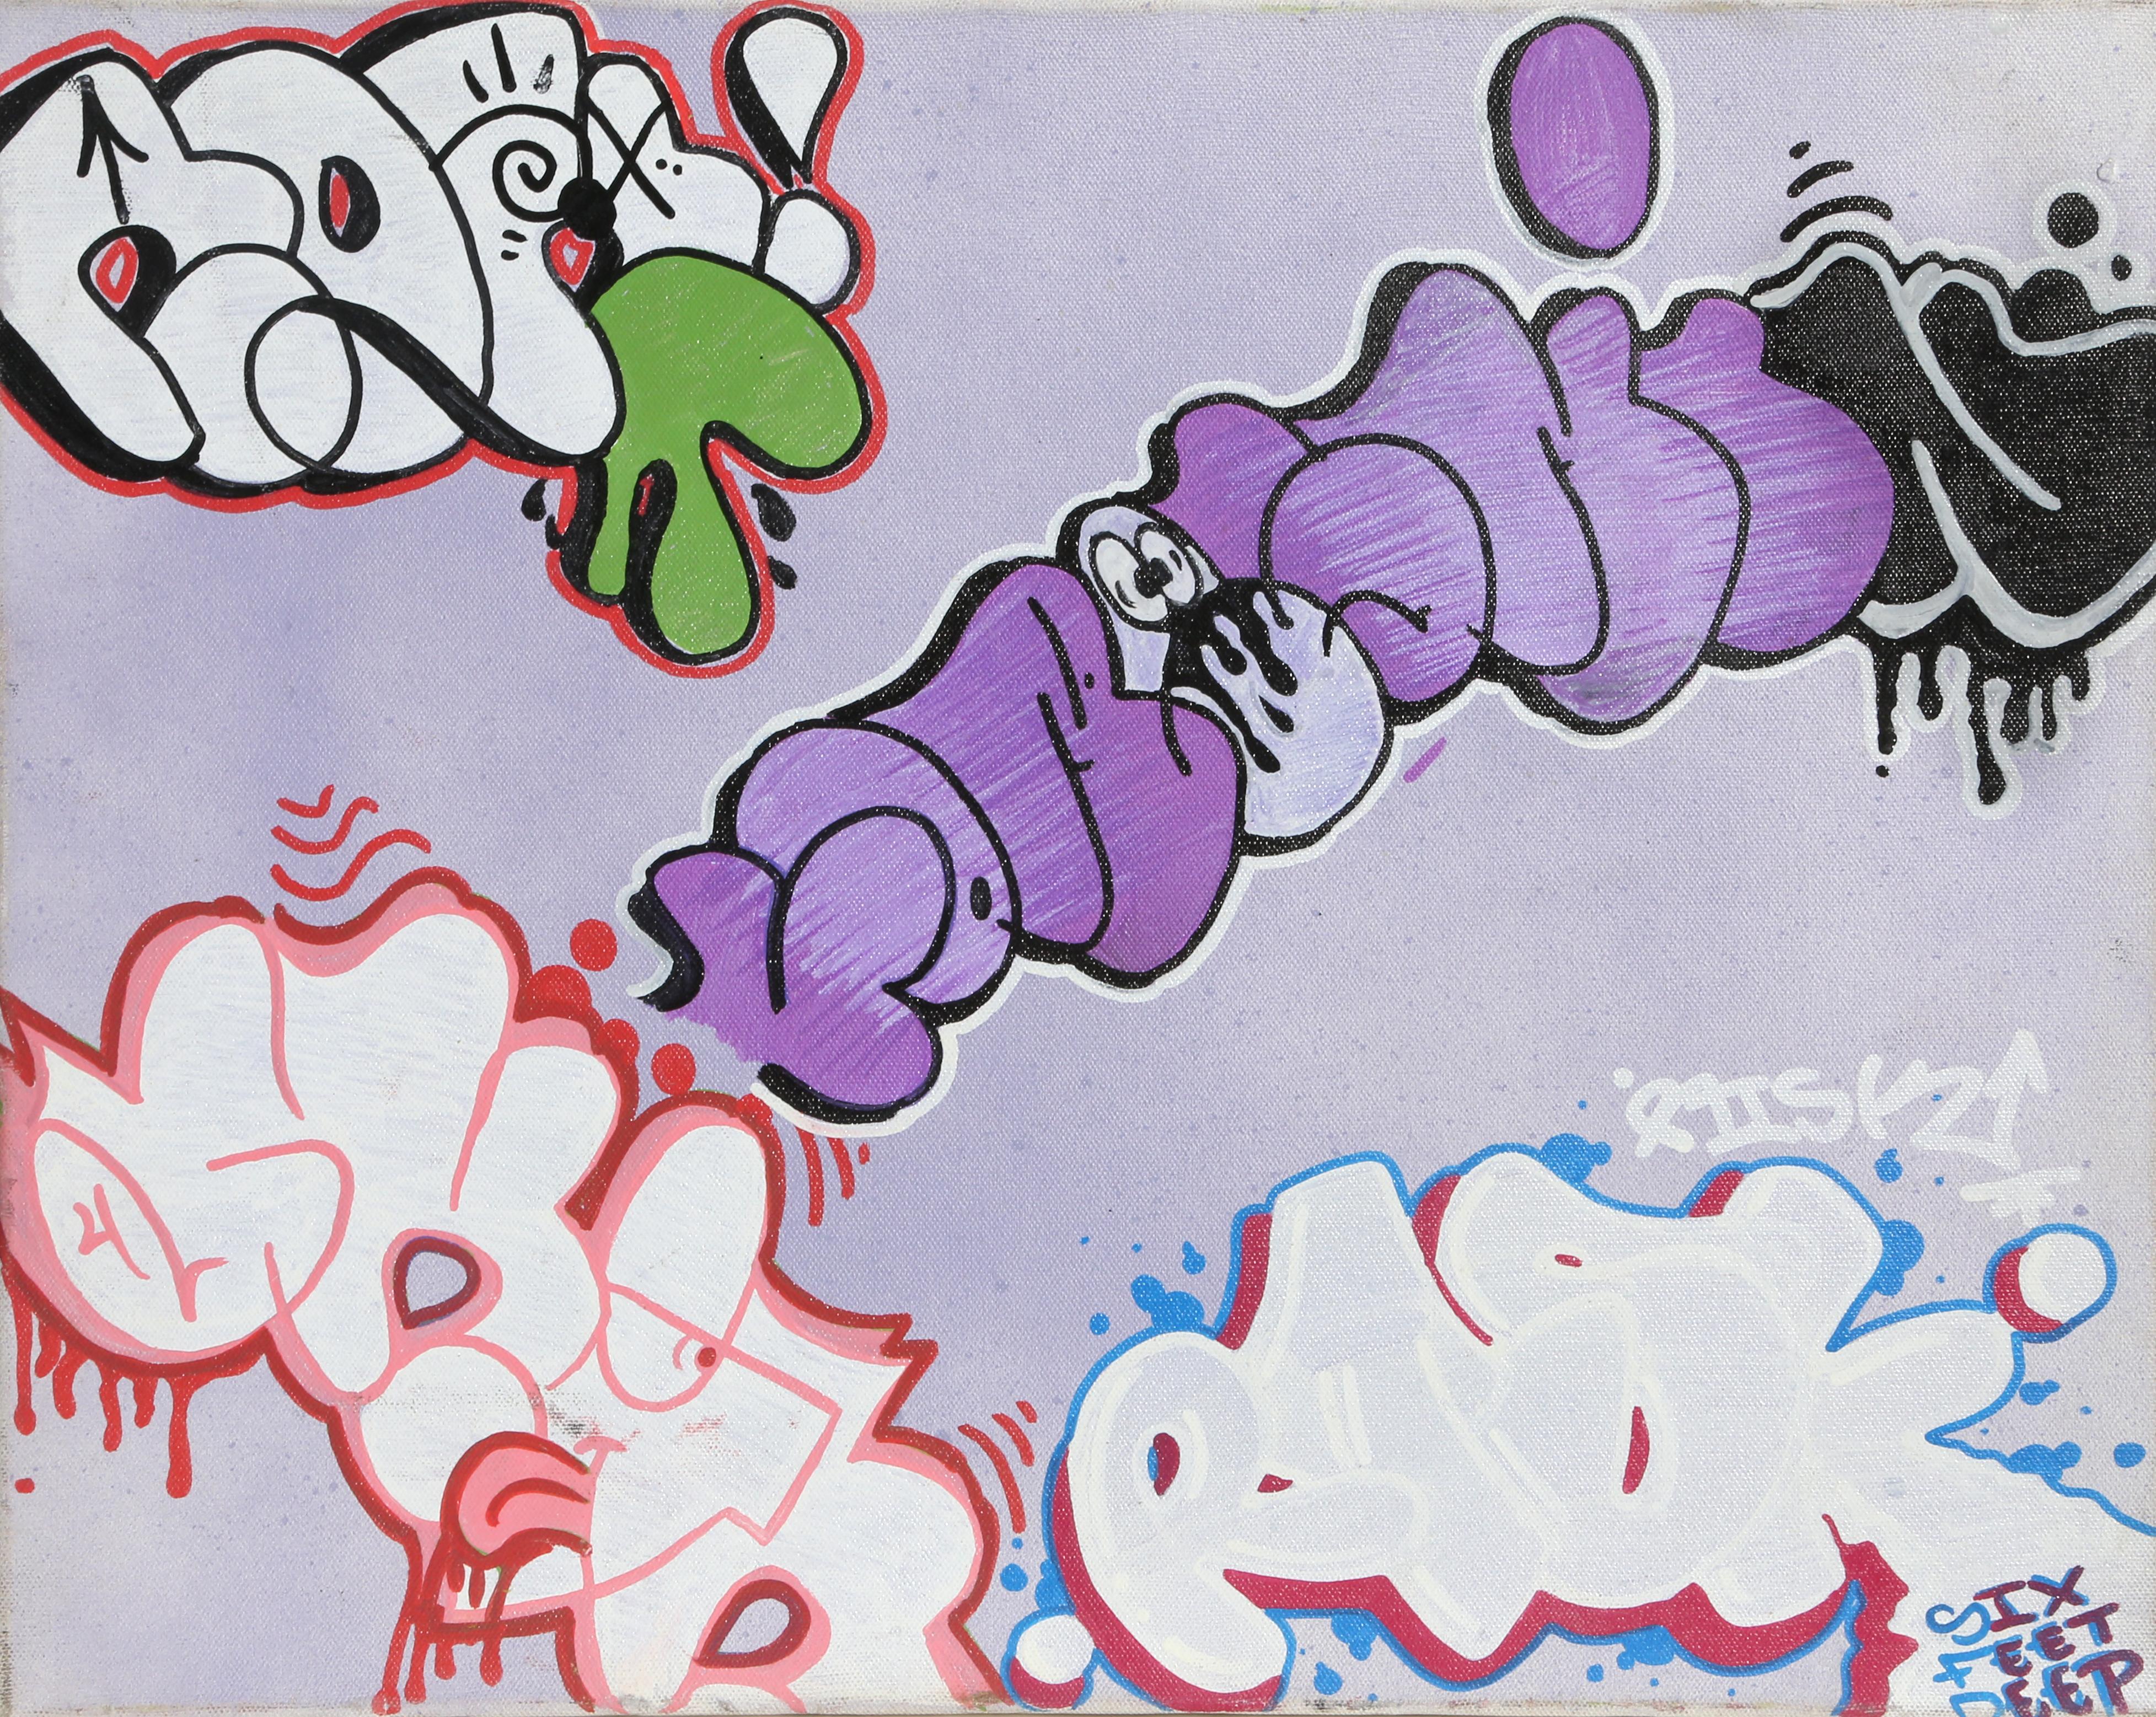 Risk, Mixed Media Graffiti Painting on Canvas